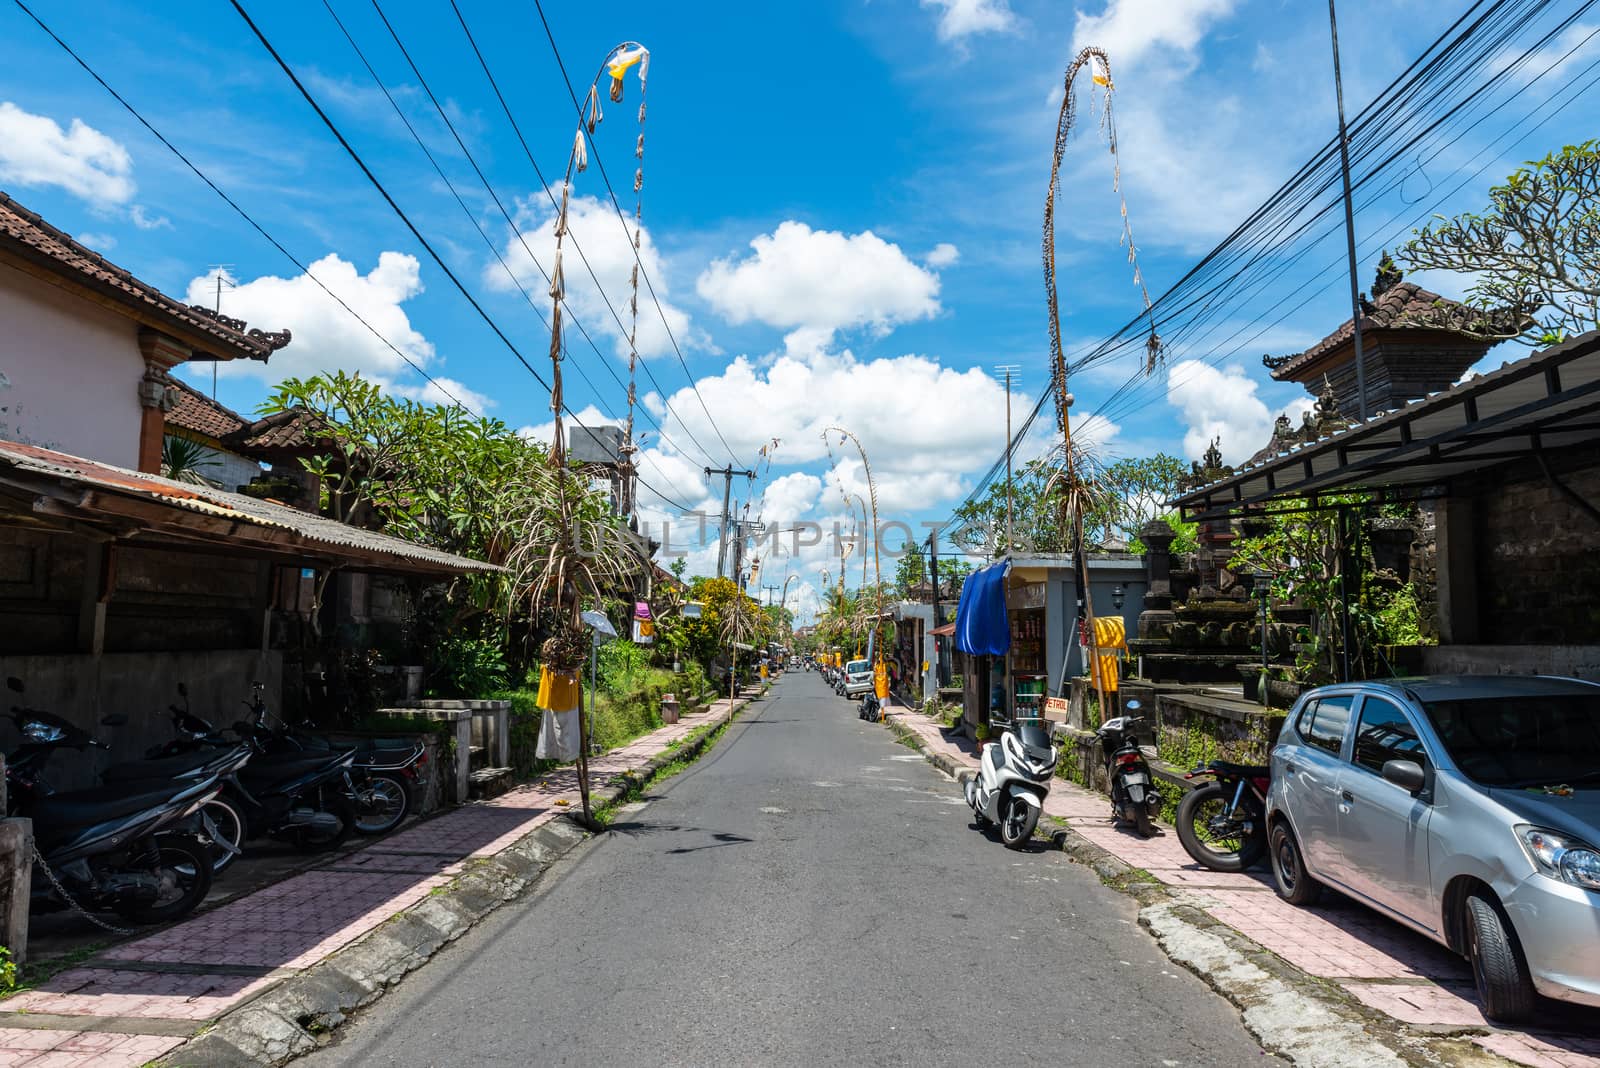 Small empty street in Ubud, Bali, Indonesia